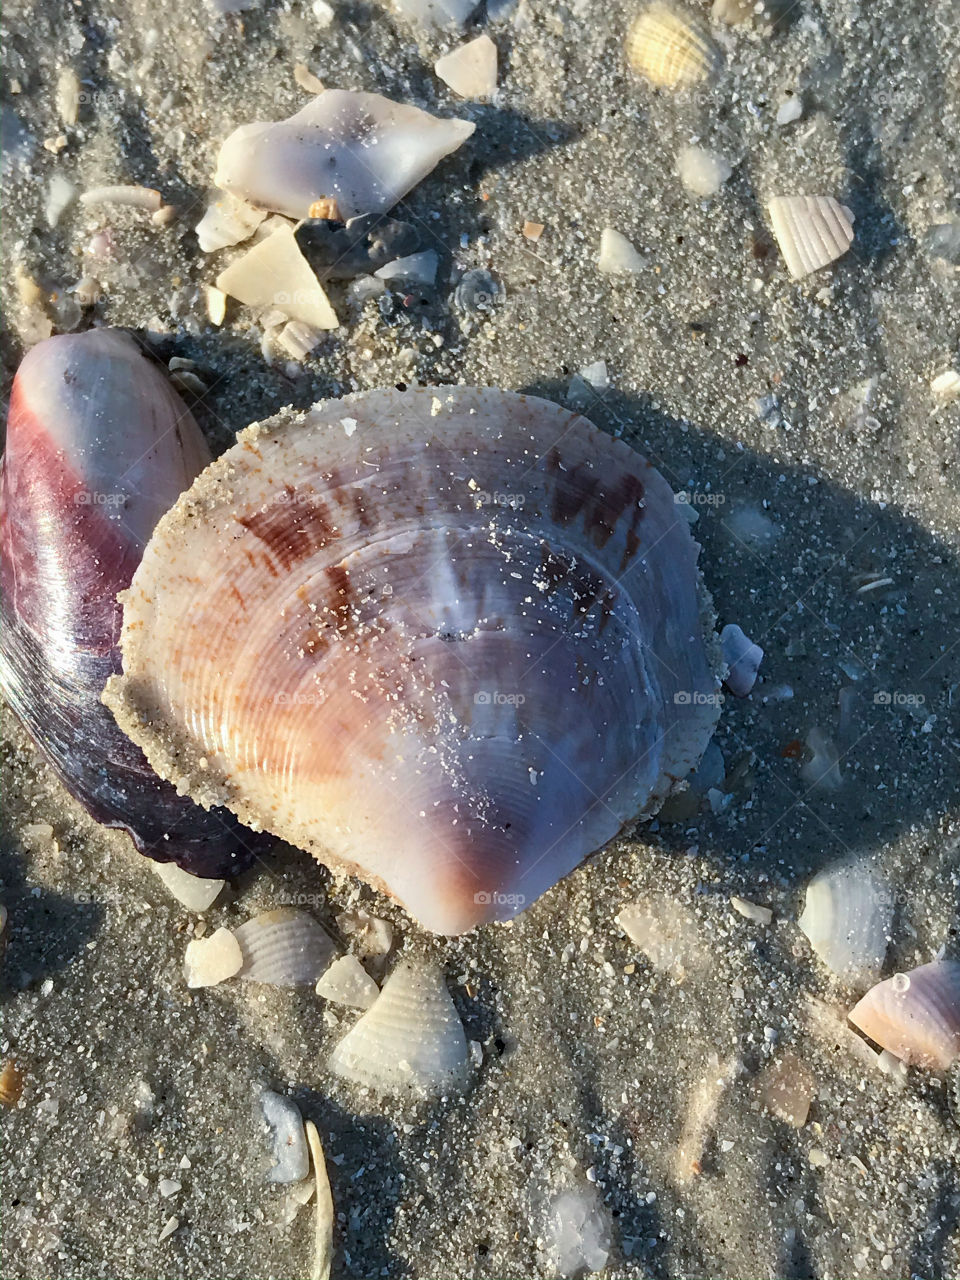 A beautiful clam on the beach ...